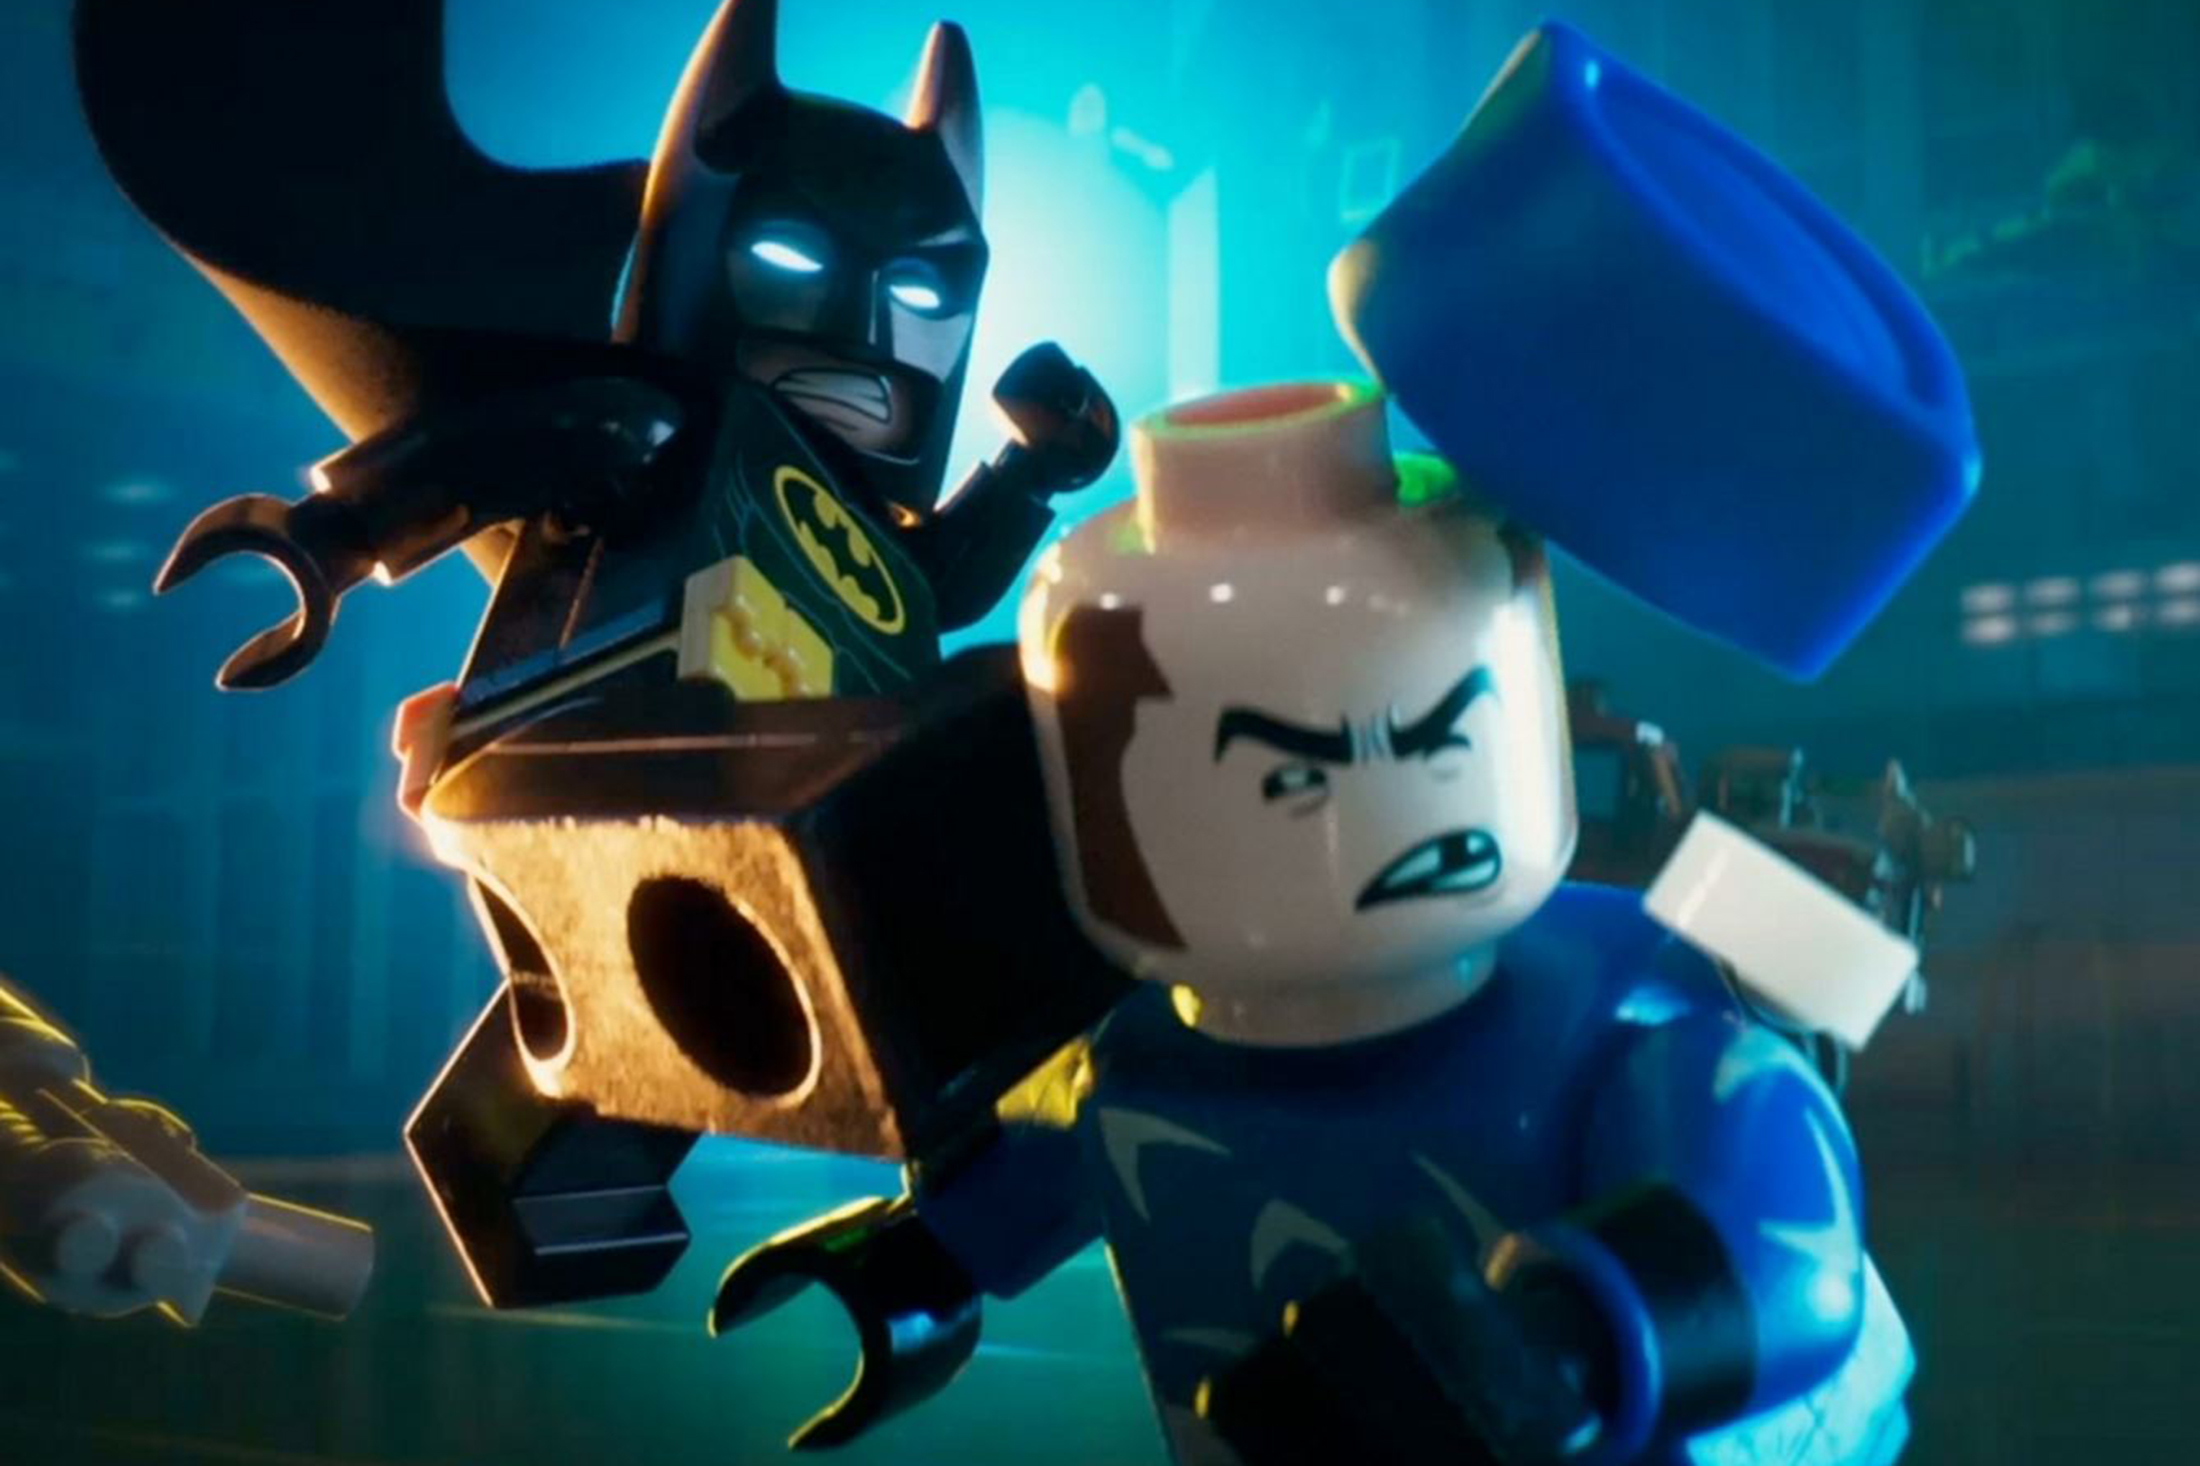 Lego Batman' beats 'Fifty Shades Darker' at US box office